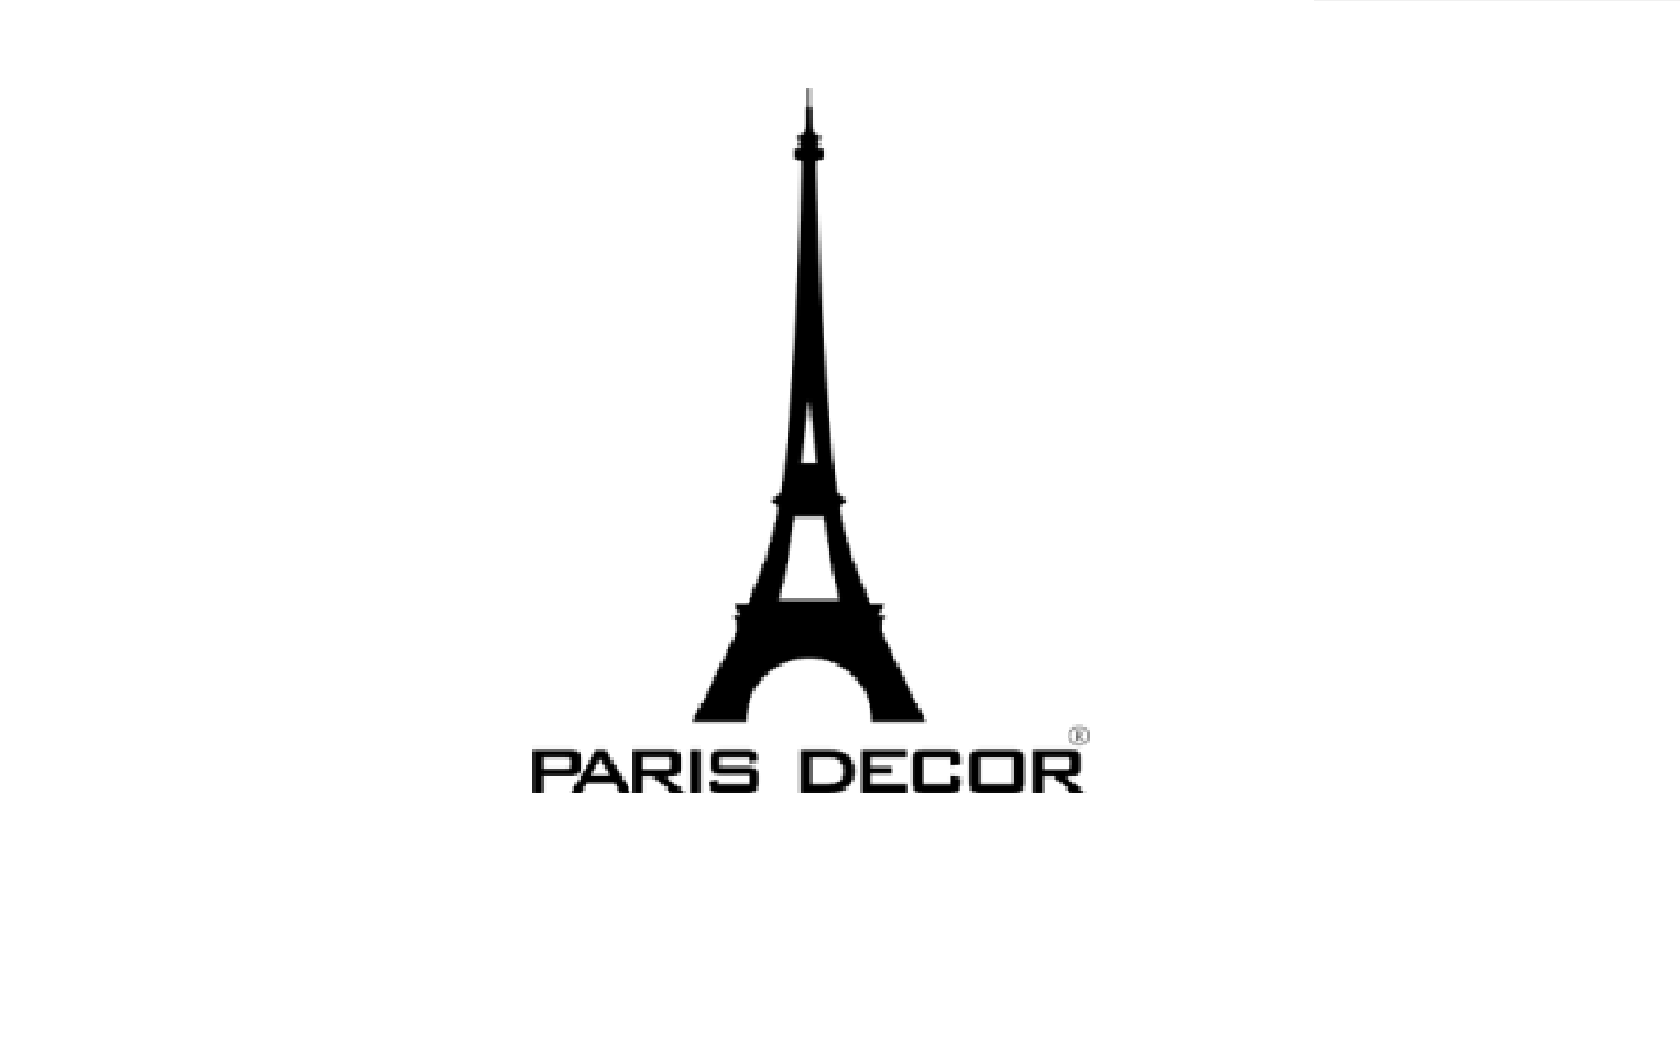 PARIS DECOR